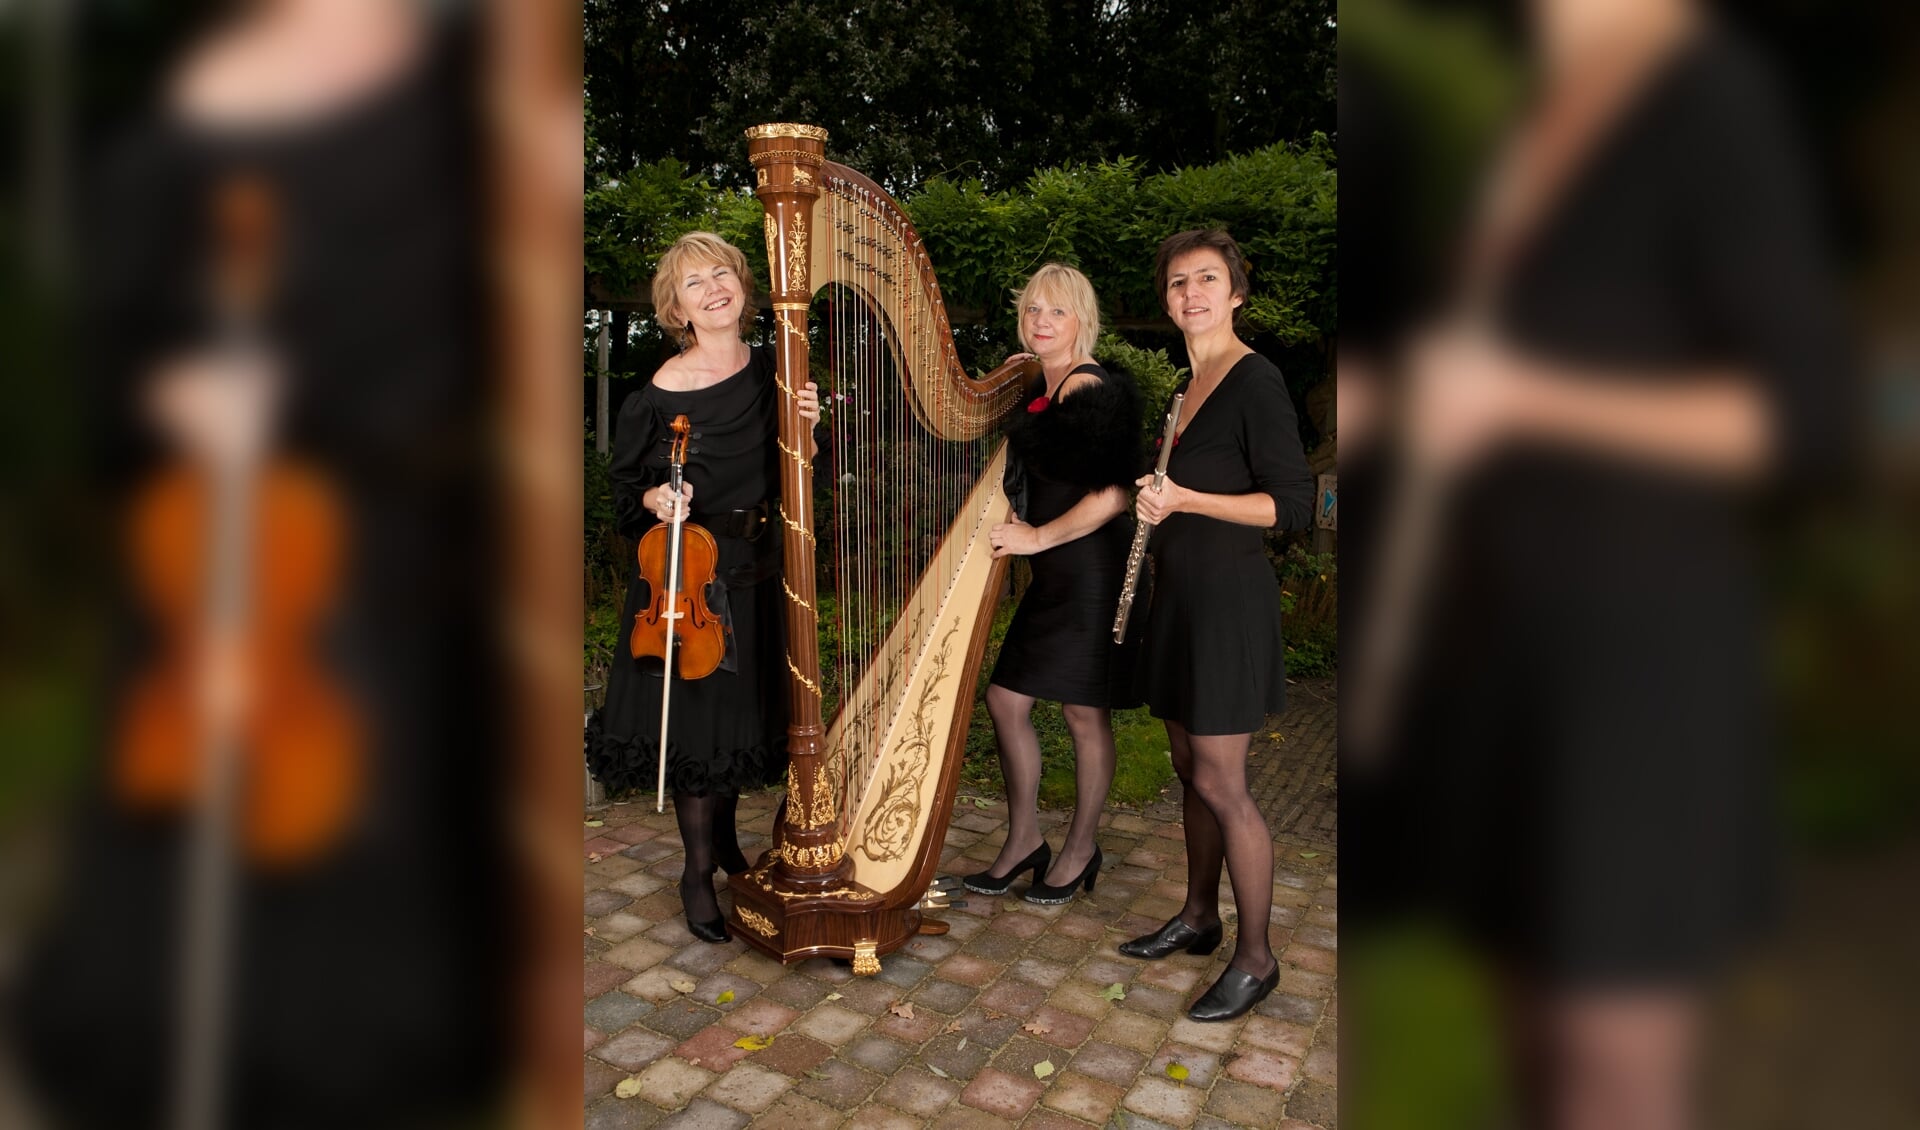 Concerto Alankara: Michaela Hollmannová, Diana de Vries en Esther de Graaf. Foto: PR